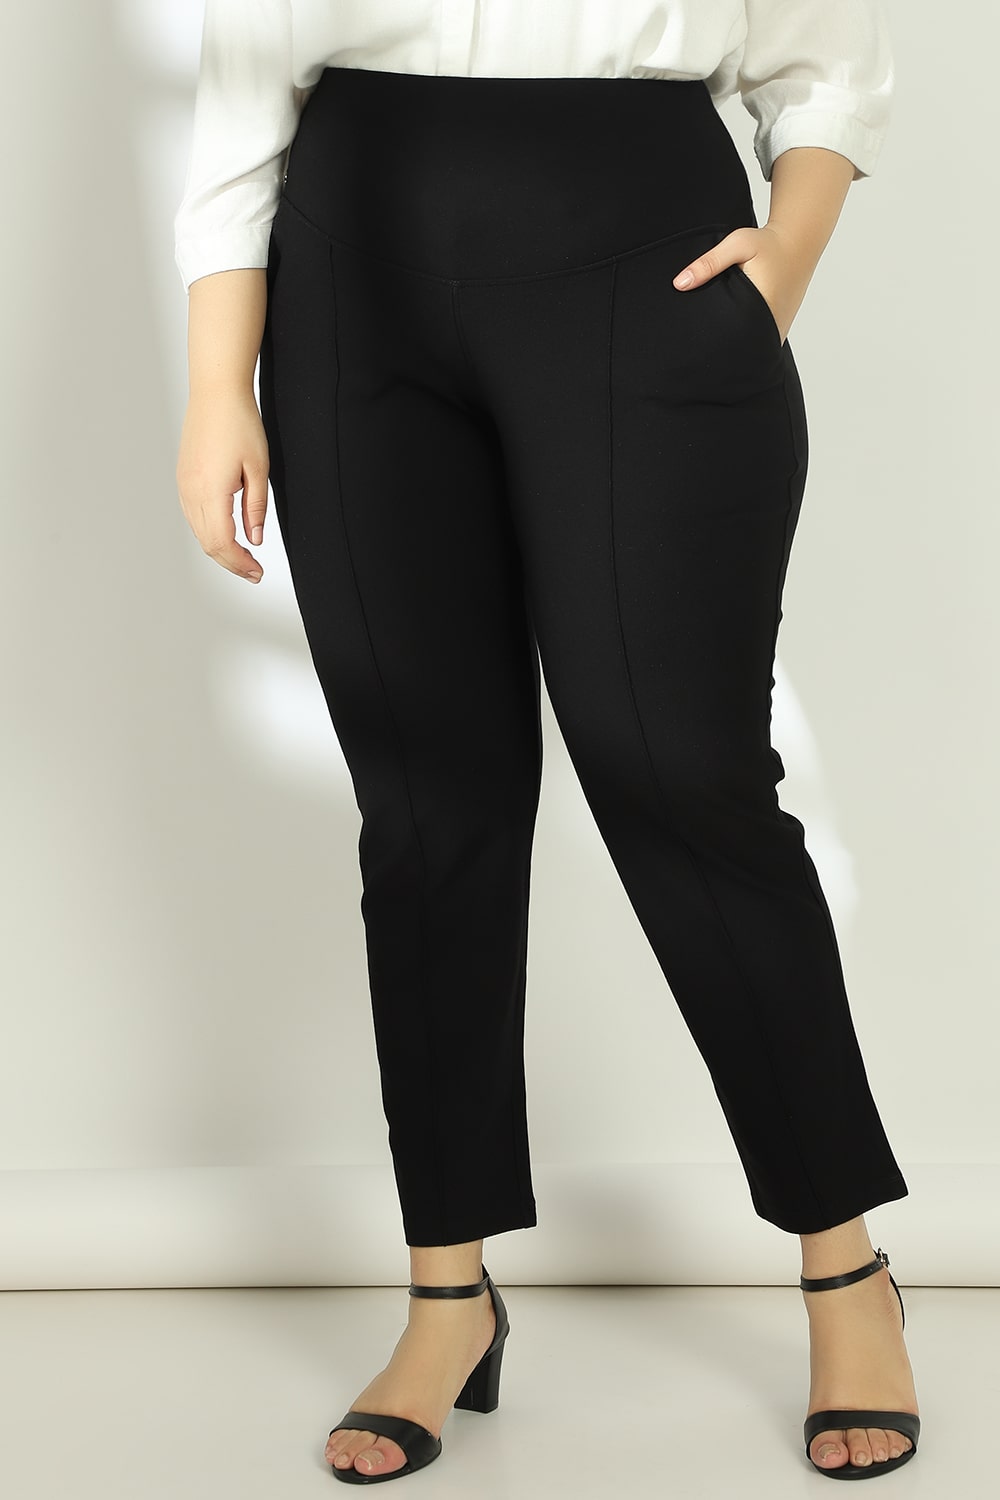 xiangDd Women Stretch Pants Plus Size Women's Causual Elastic Trouser Pant  Summer Plus Size Flare Yoga Pants for Women, Black, Medium : :  Clothing, Shoes & Accessories